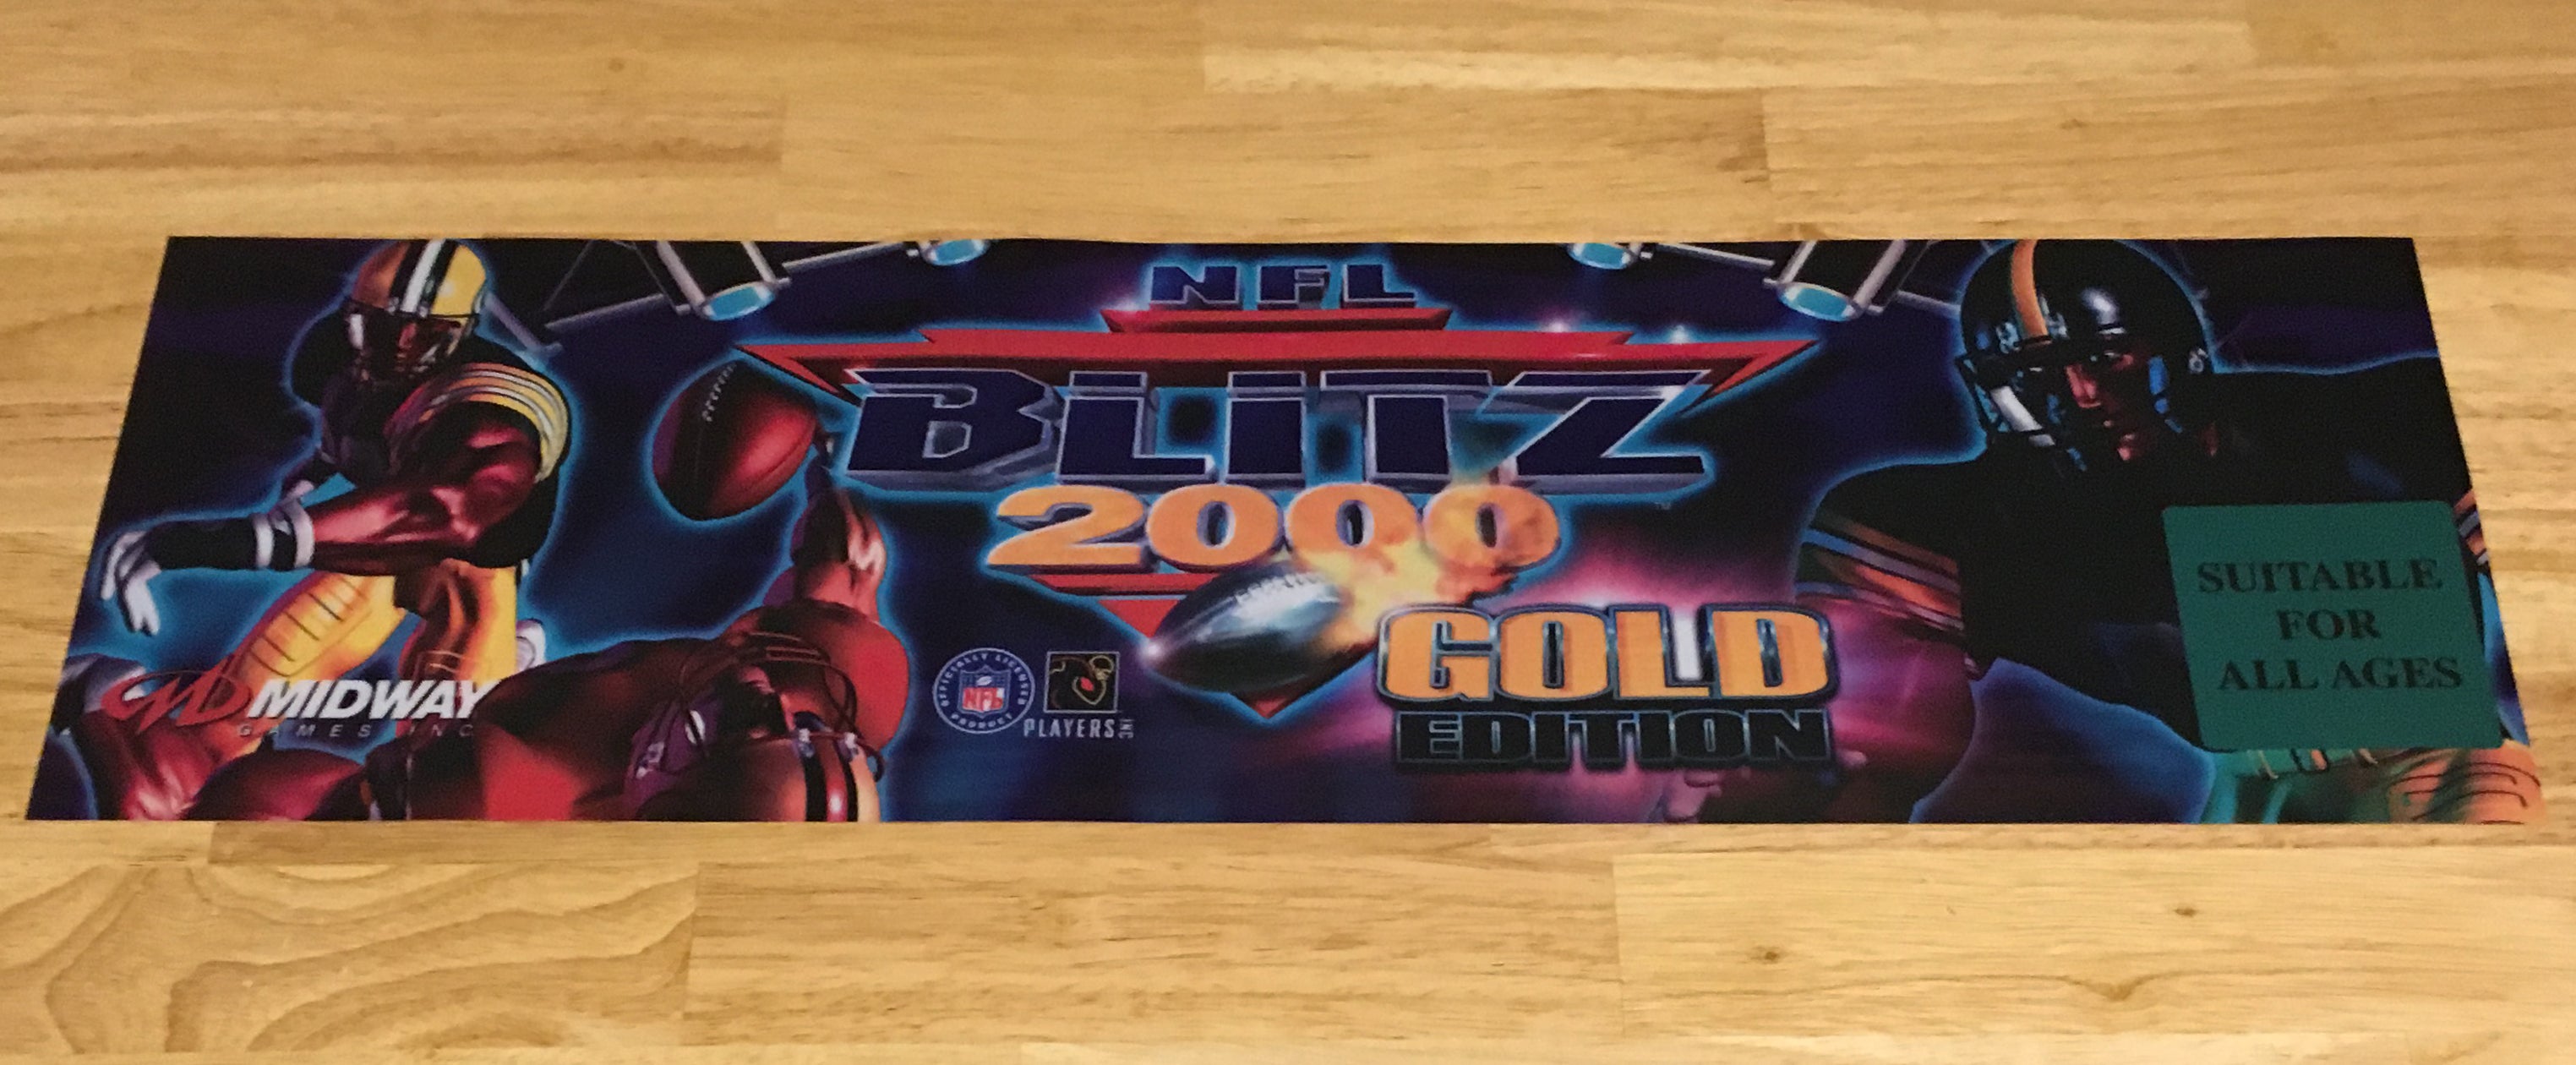 Carpa dorada NFL Blitz 2000